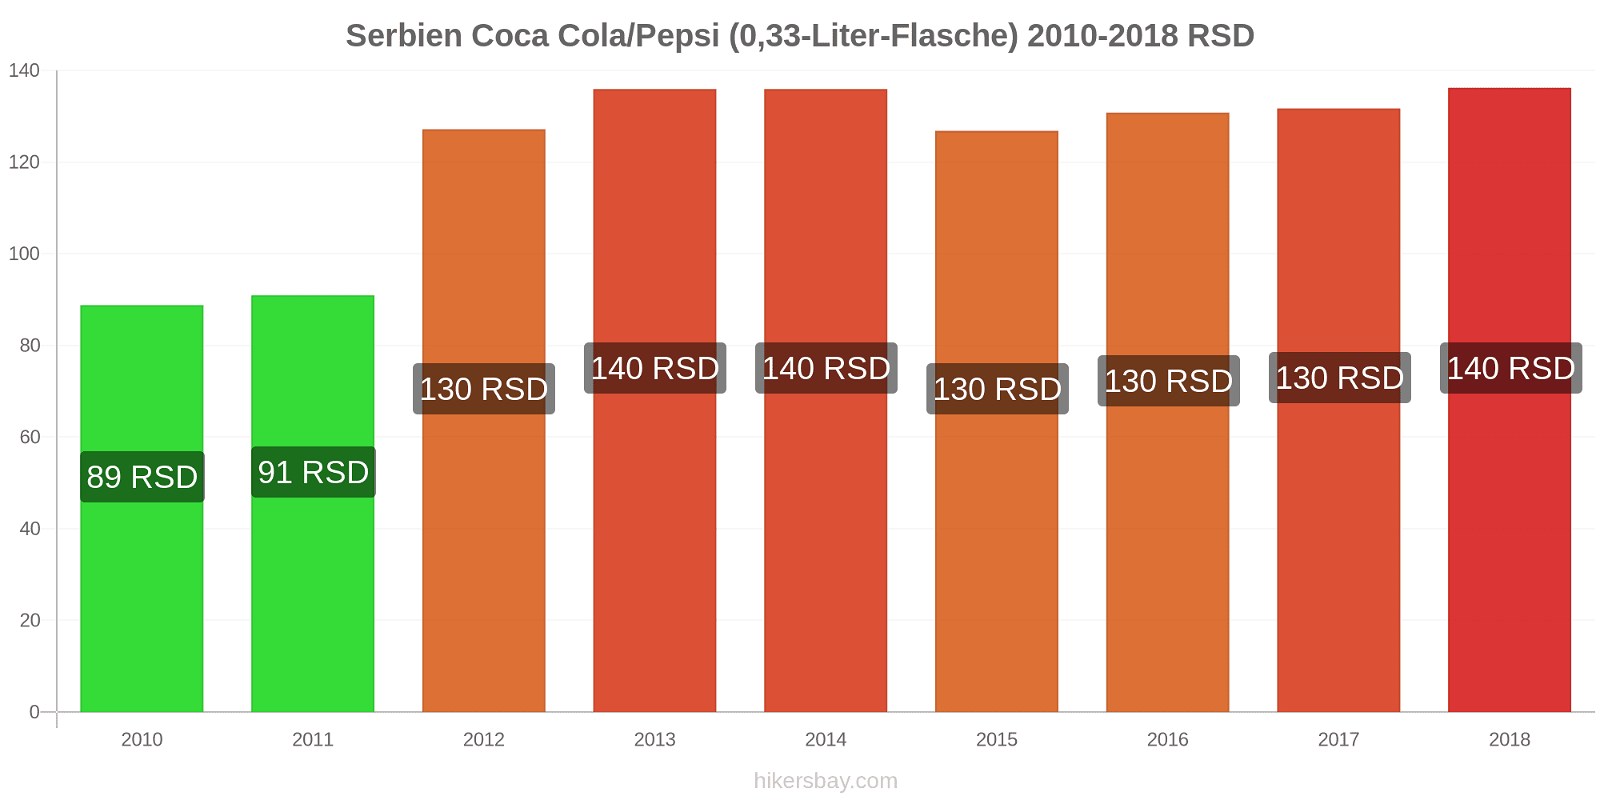 Serbien Preisänderungen Coke/Pepsi (0,33-Liter-Flasche) hikersbay.com